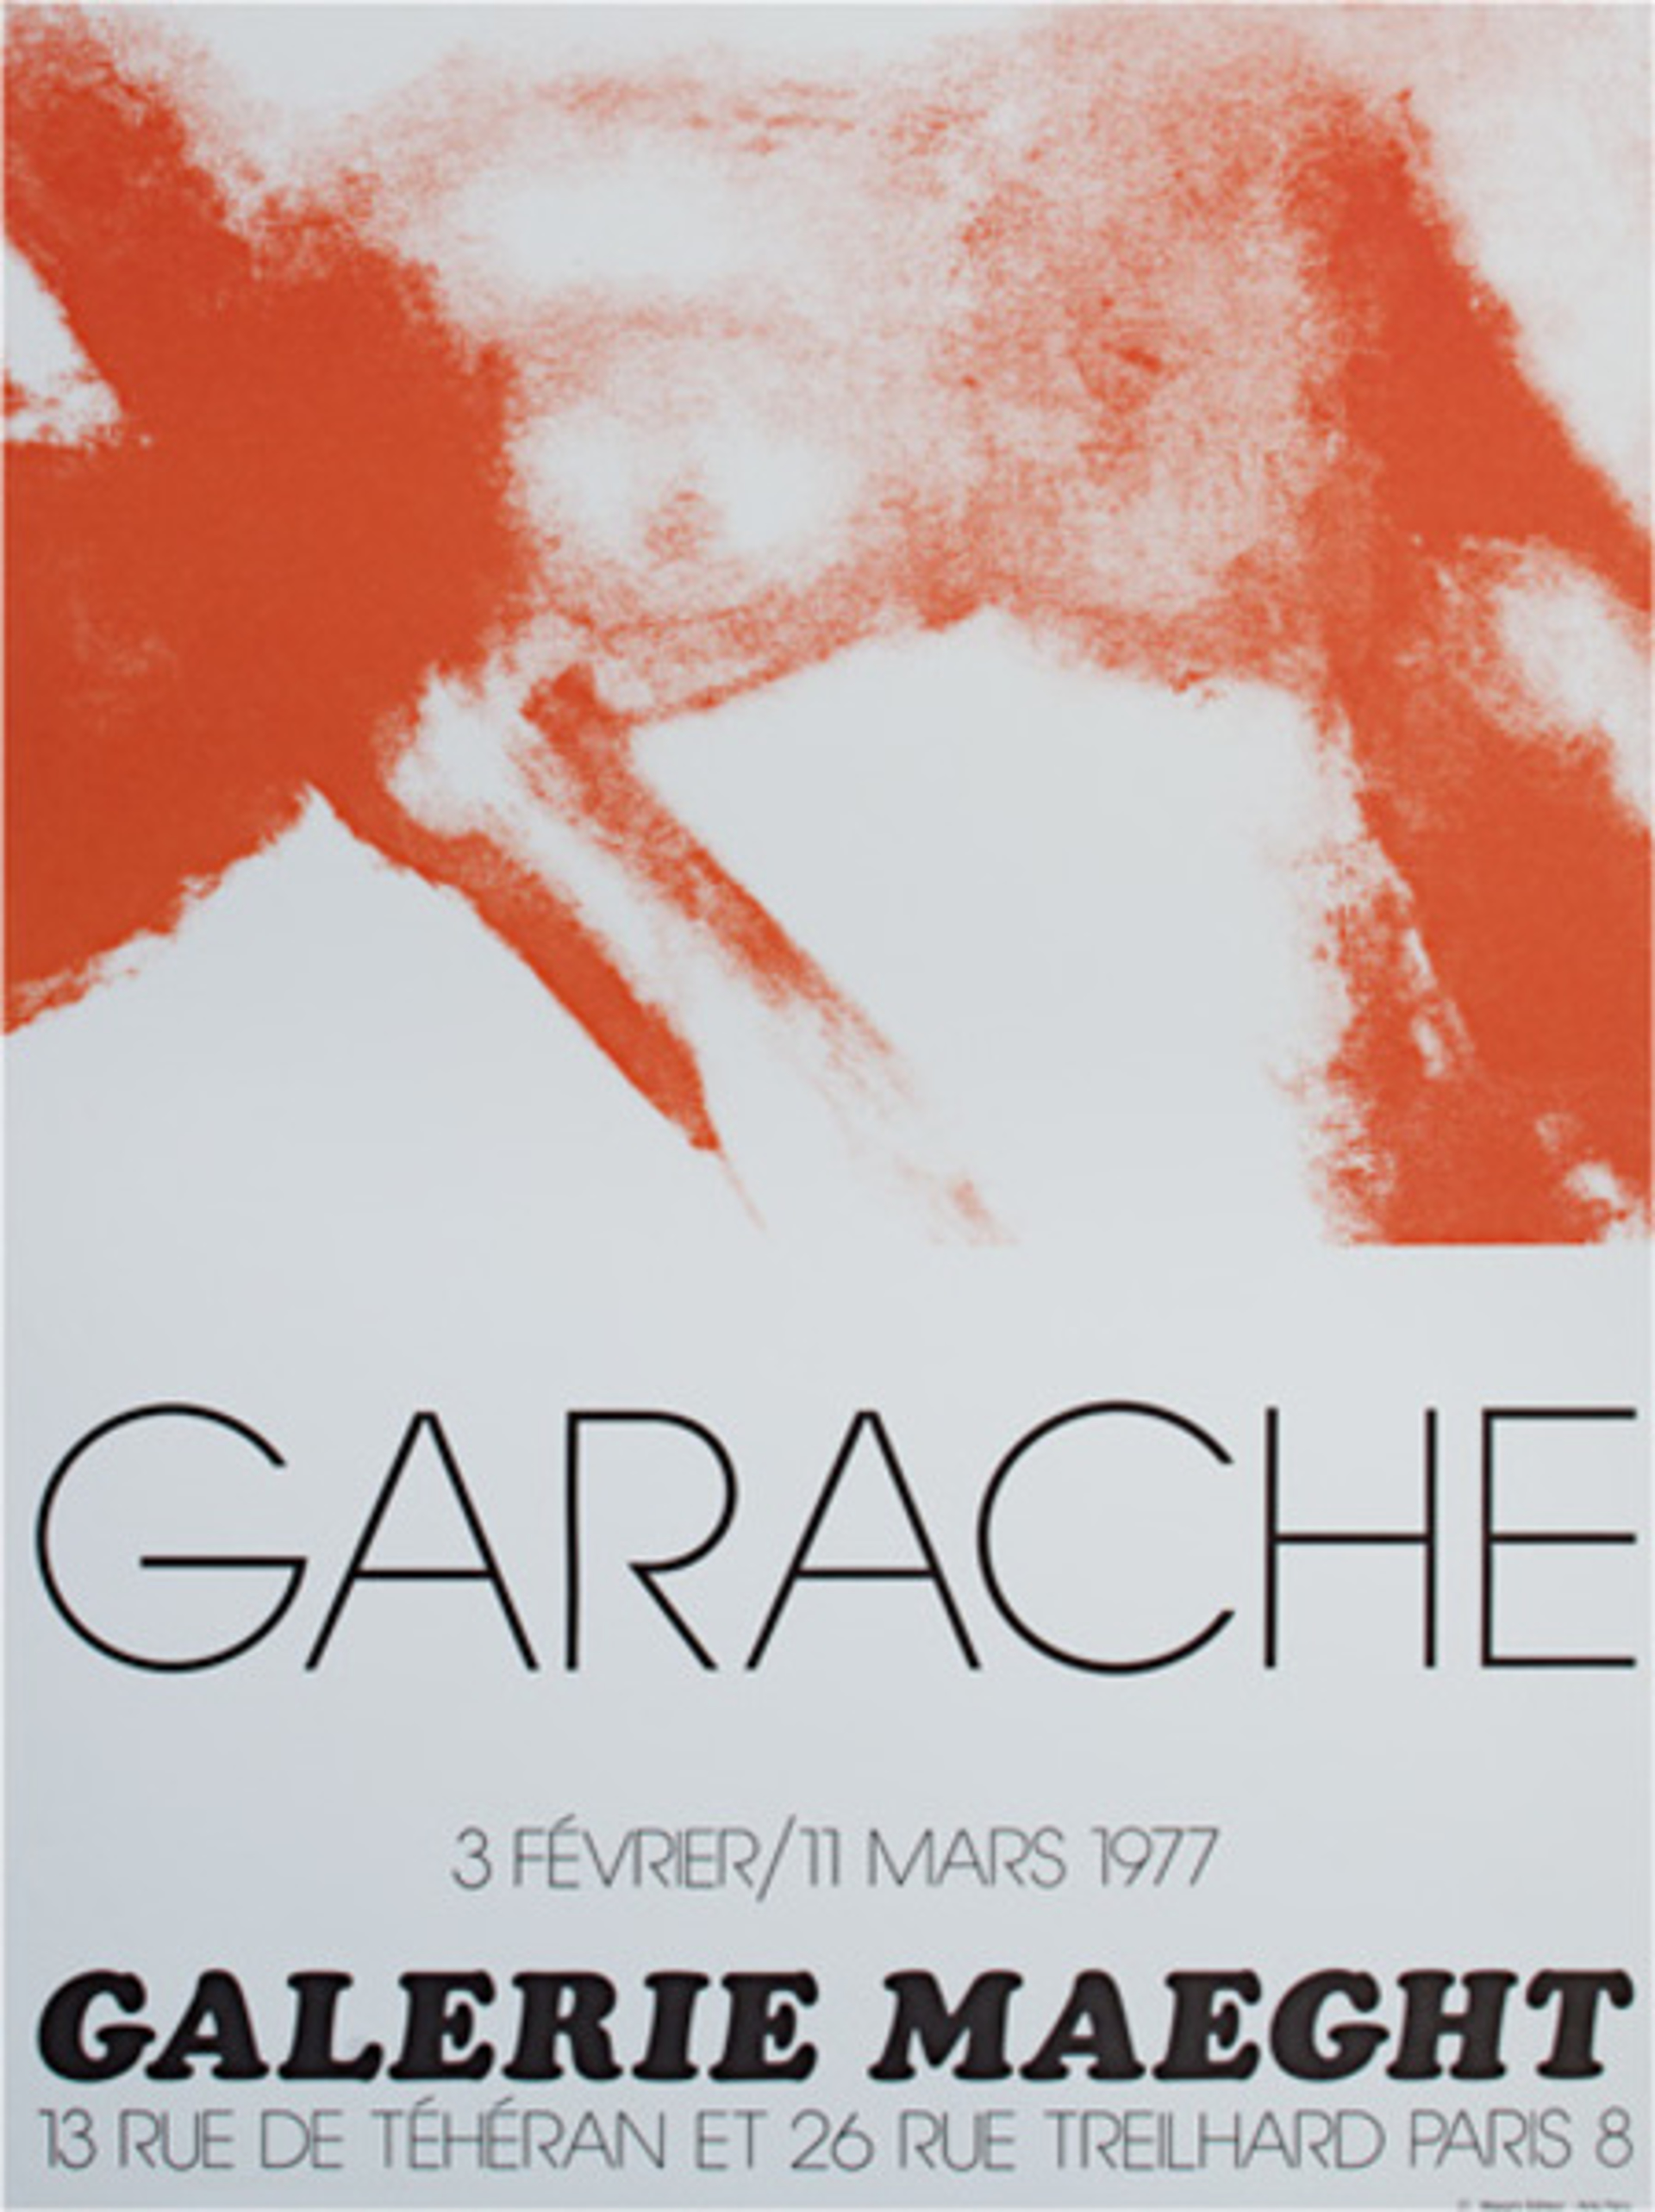 Galerie Maeght Exhibition Poster by Claude Garache